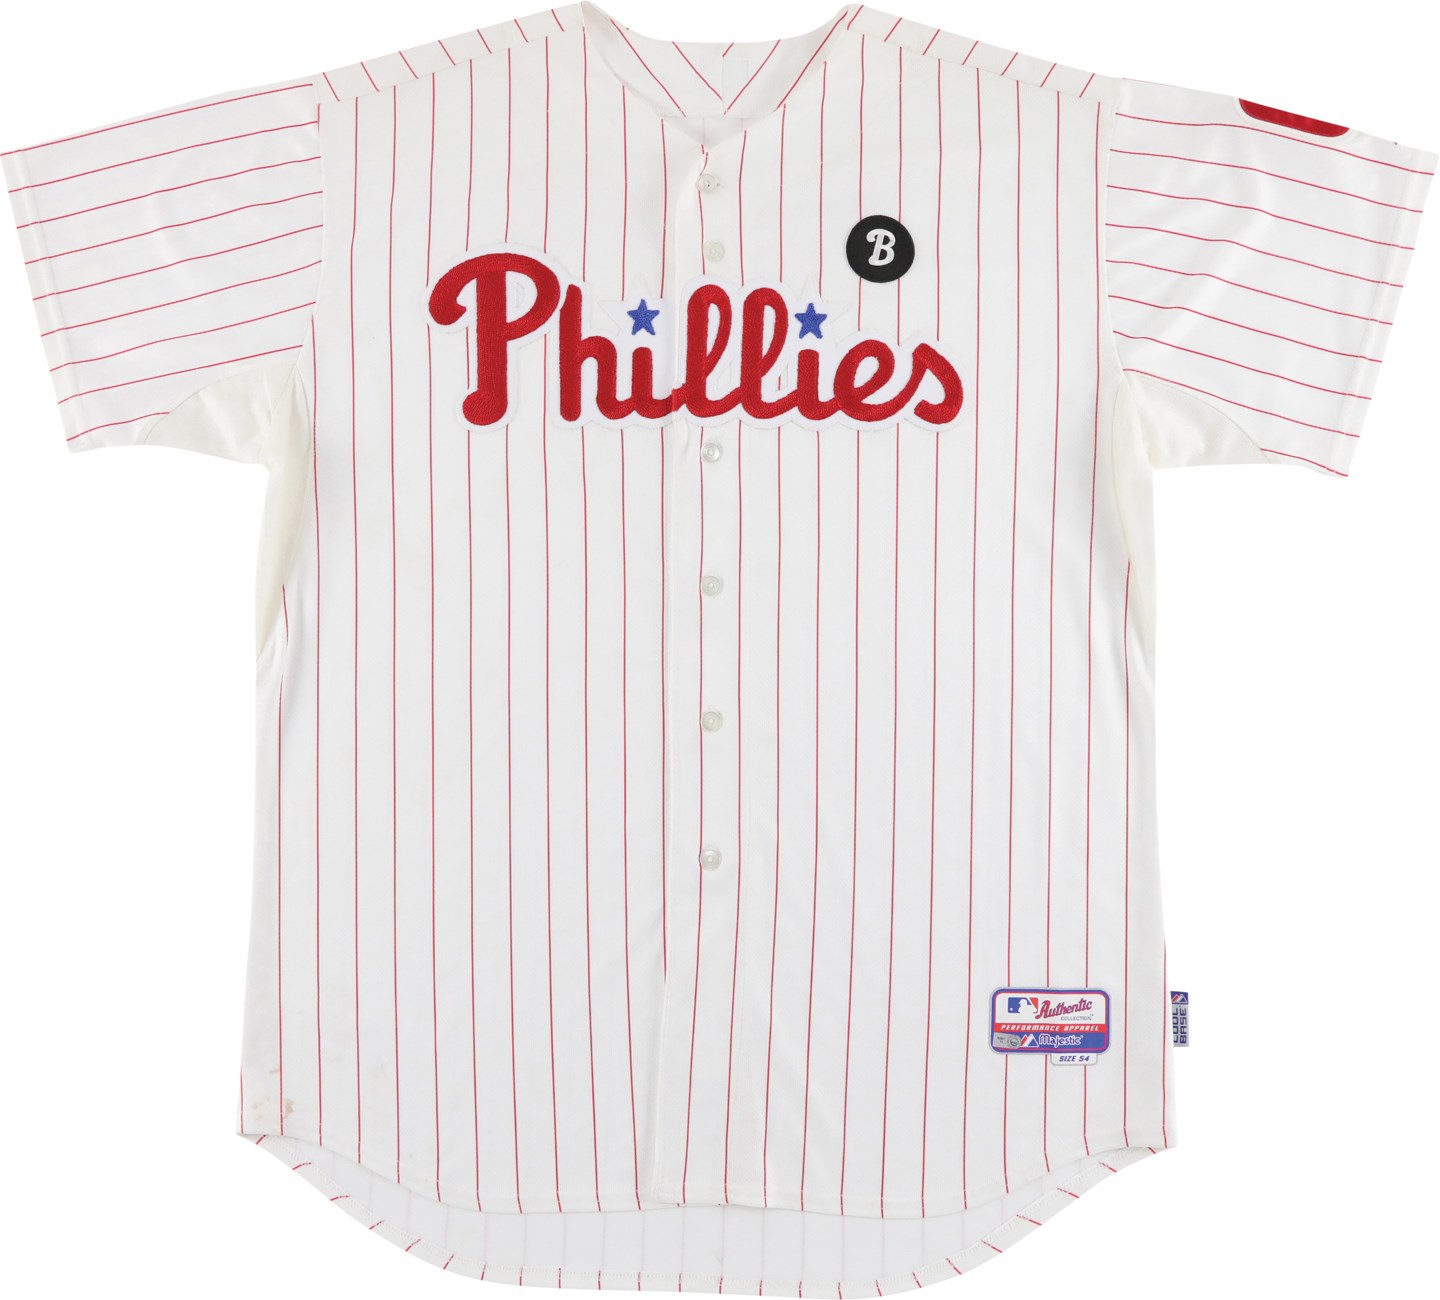 Baseball Equipment - 2011 Ryan Howard Philadelphia Phillies Team Issued Jersey (MLB)